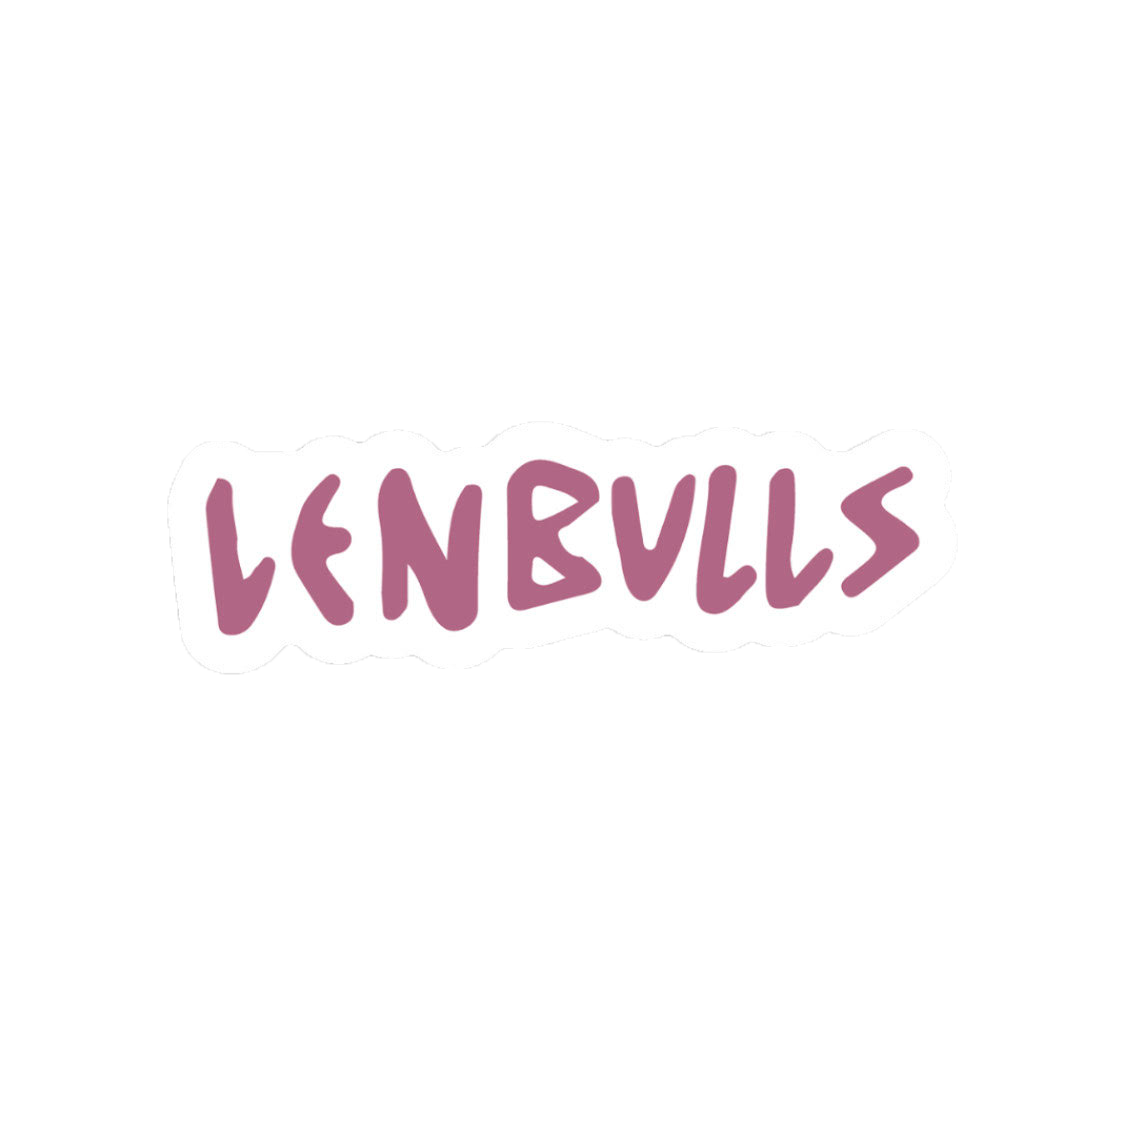 LenBulls